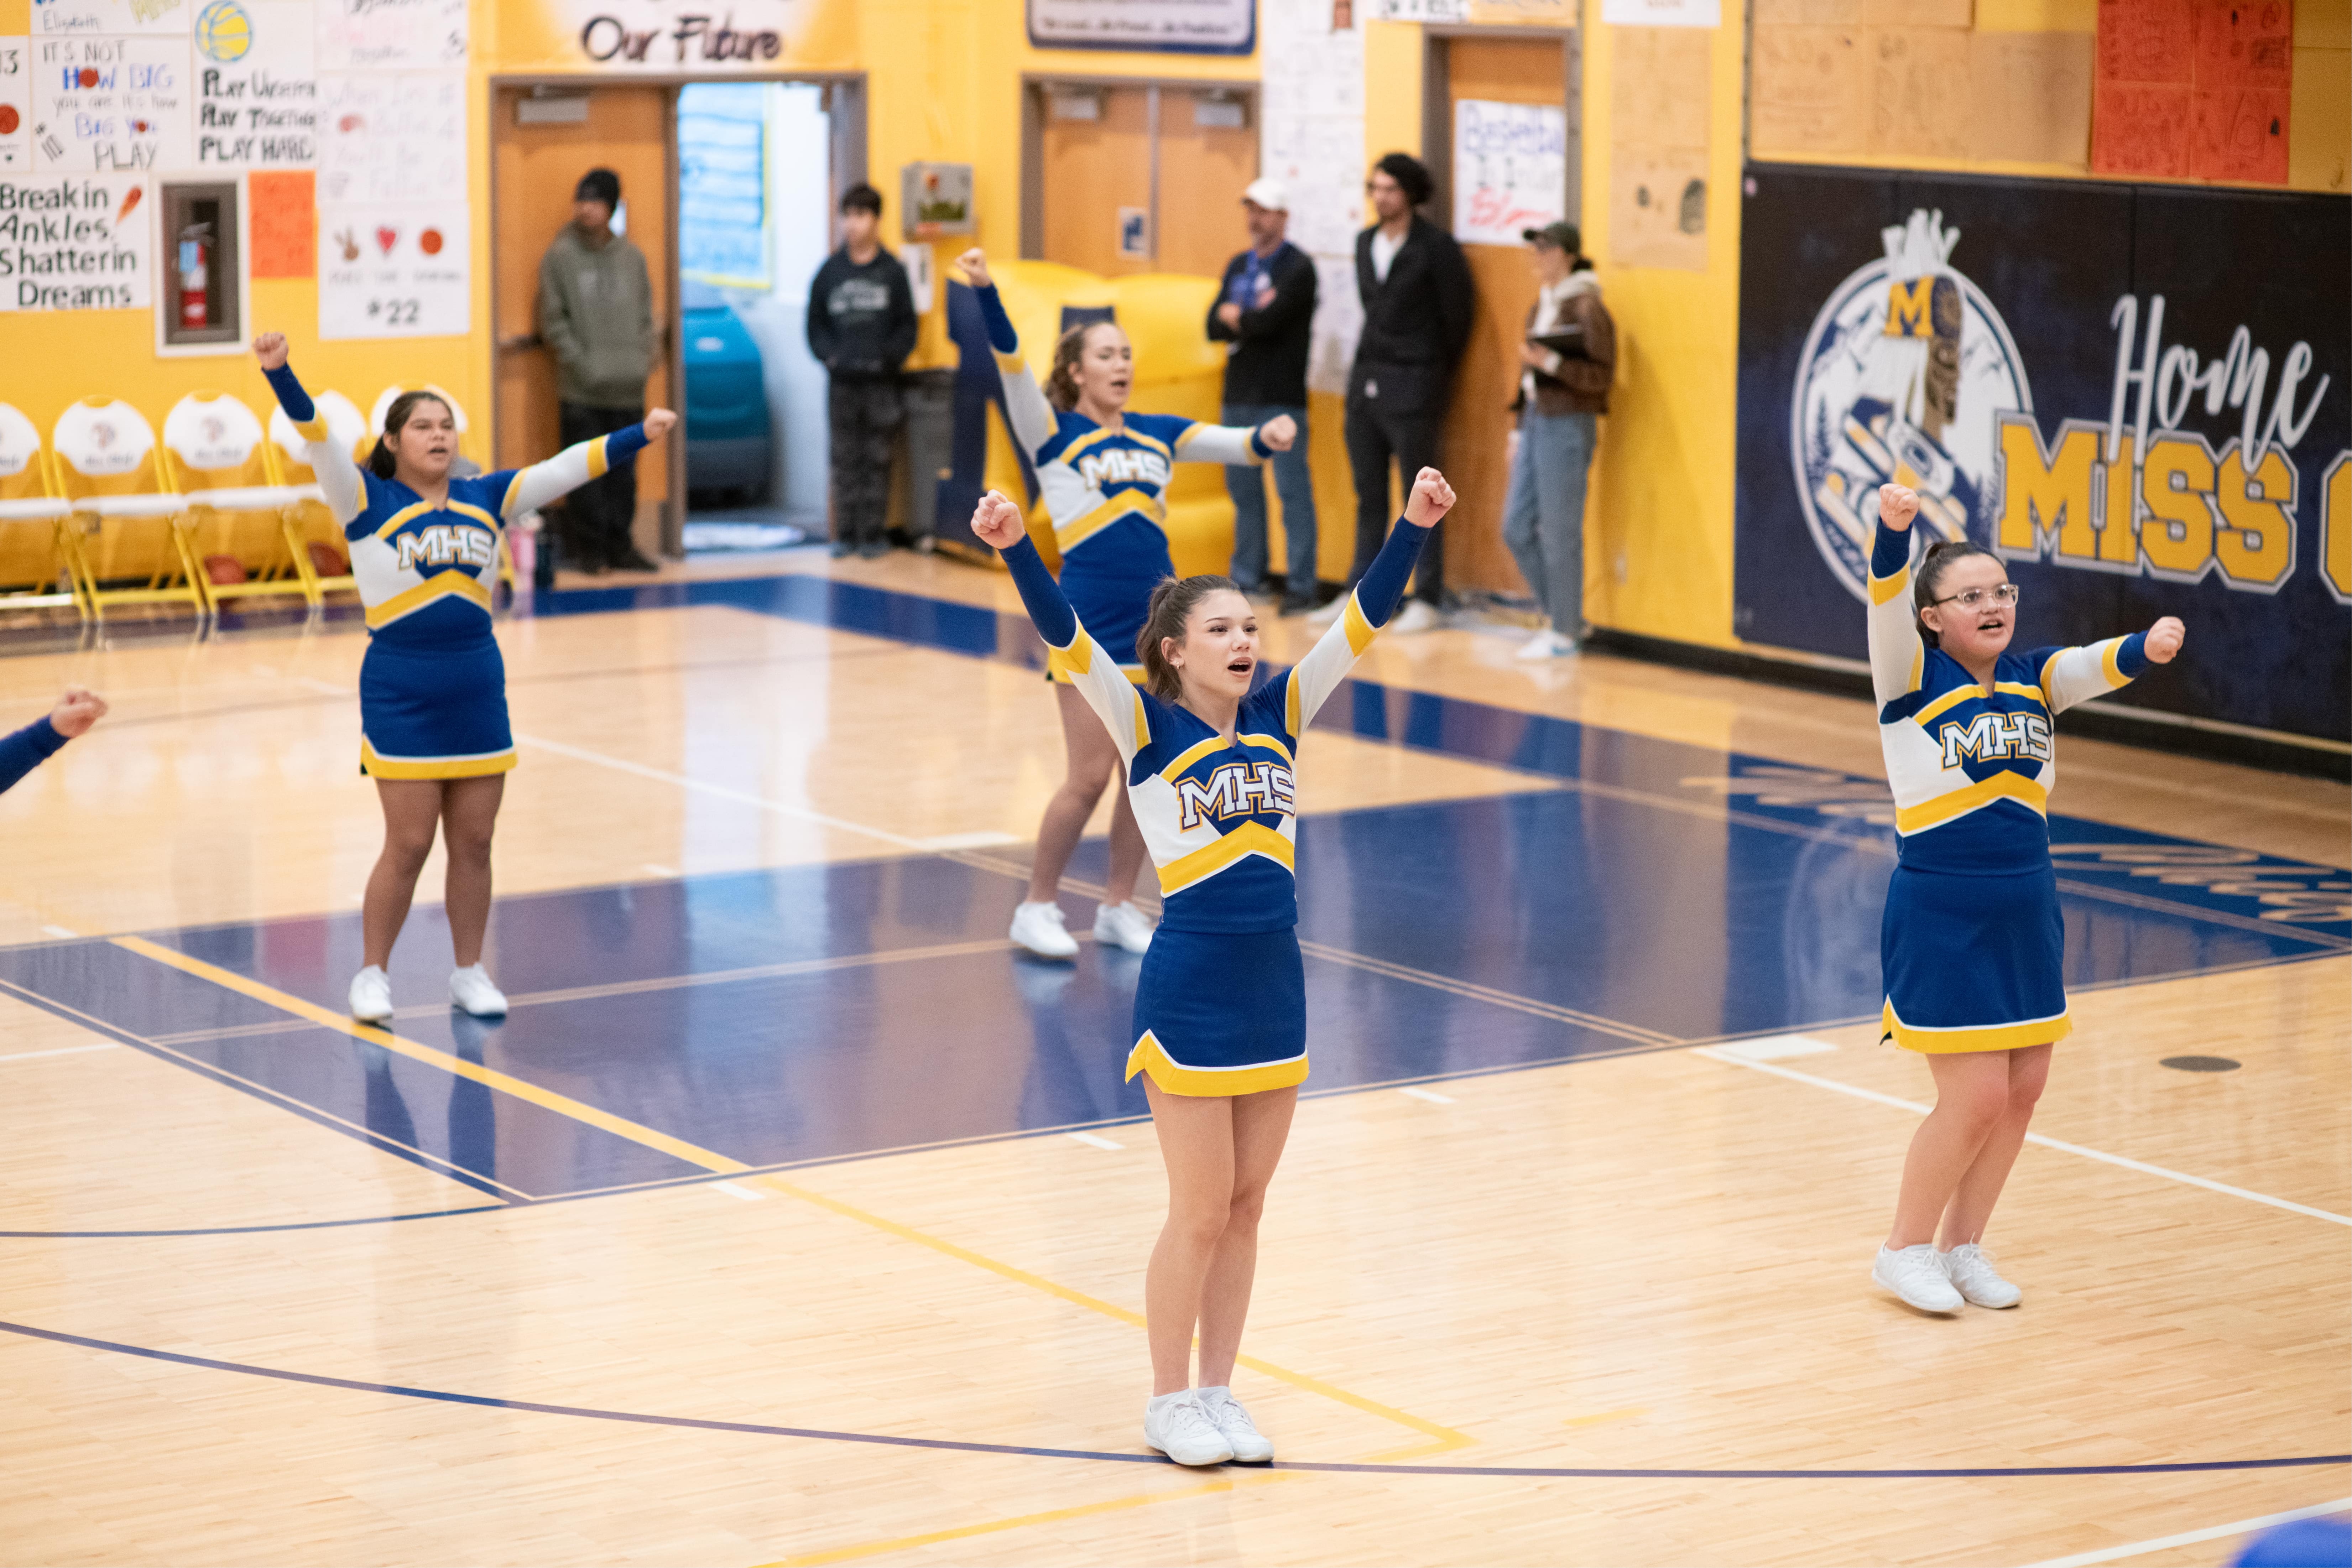 students cheerleading